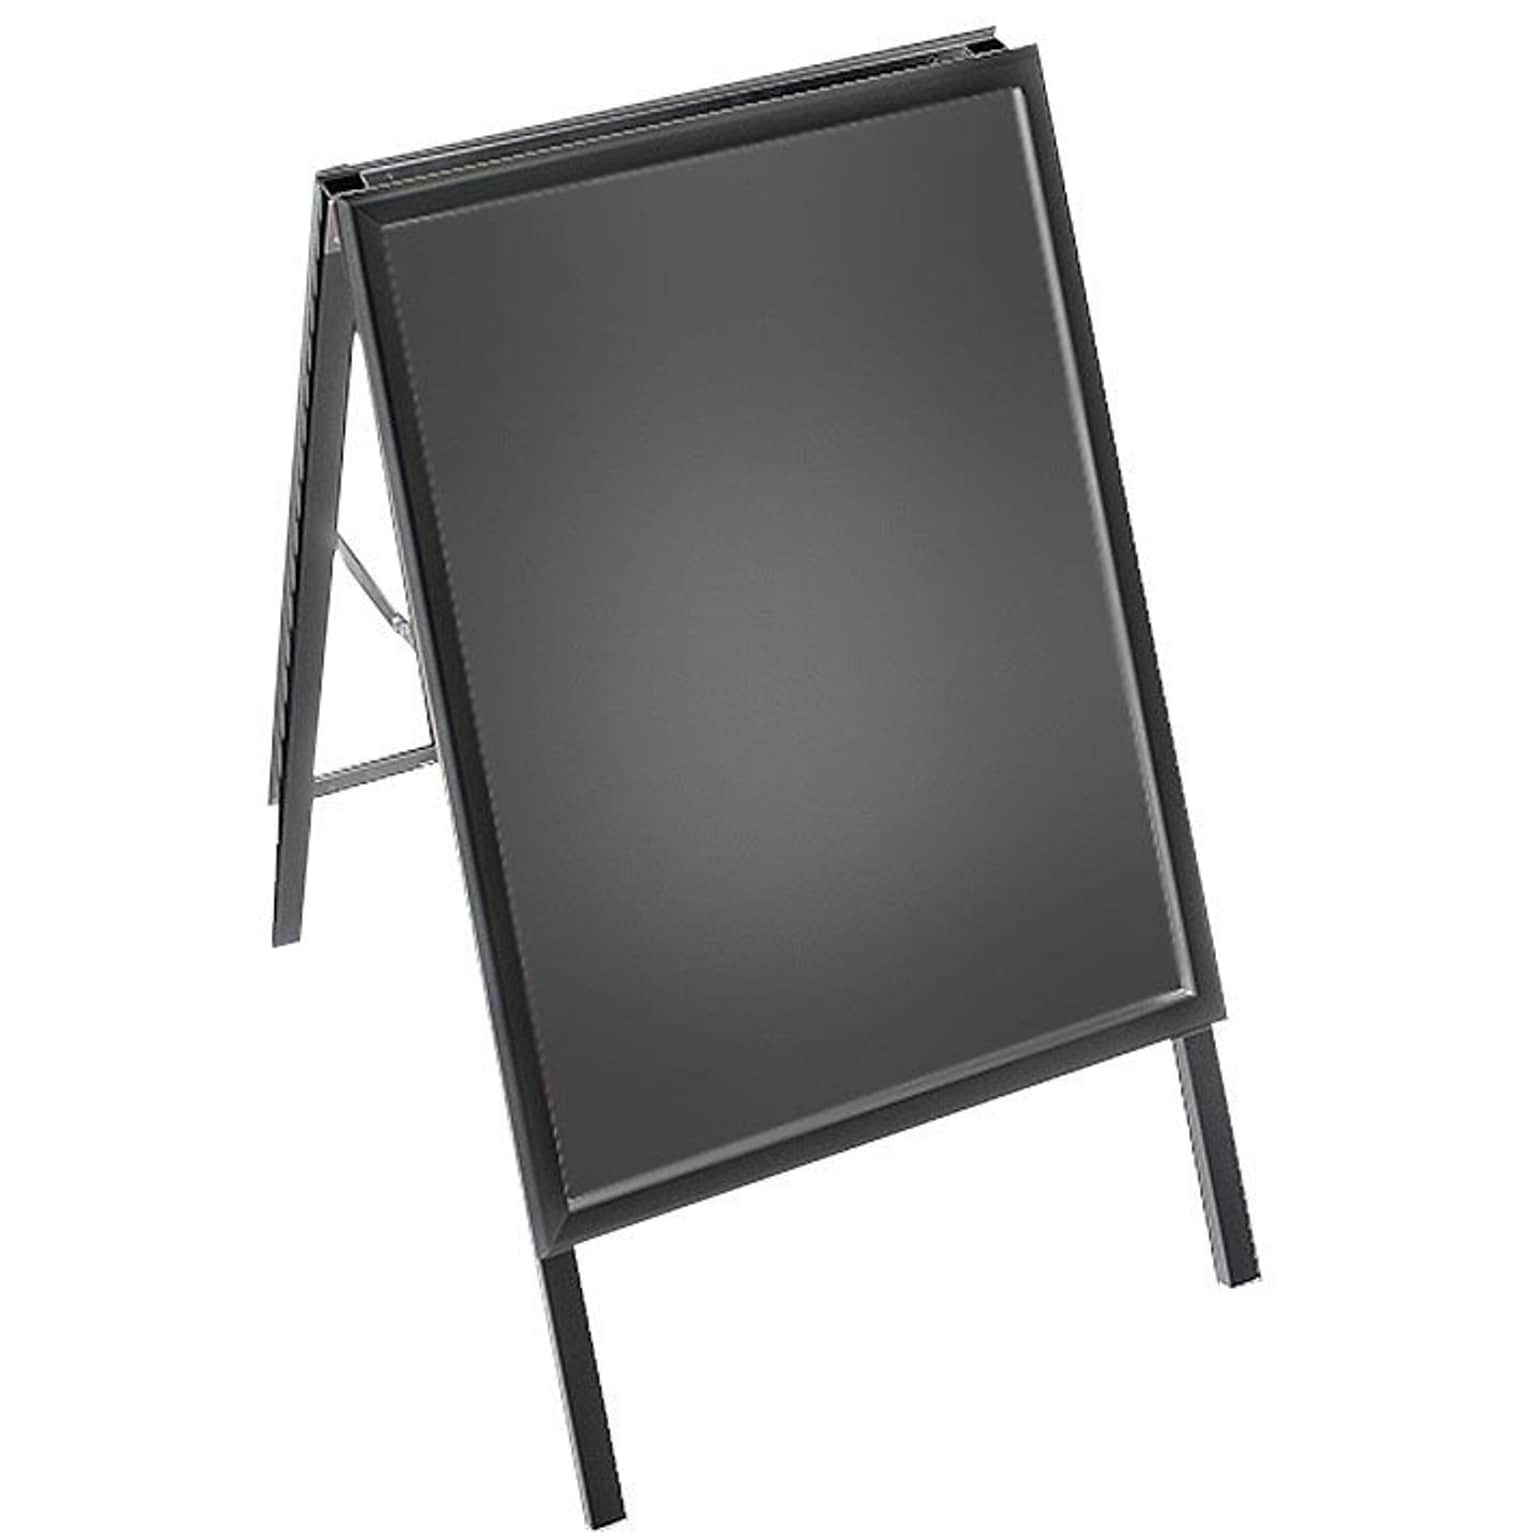 A-Board Sign in Black. Slide-In Frame Size: 22W x 28H